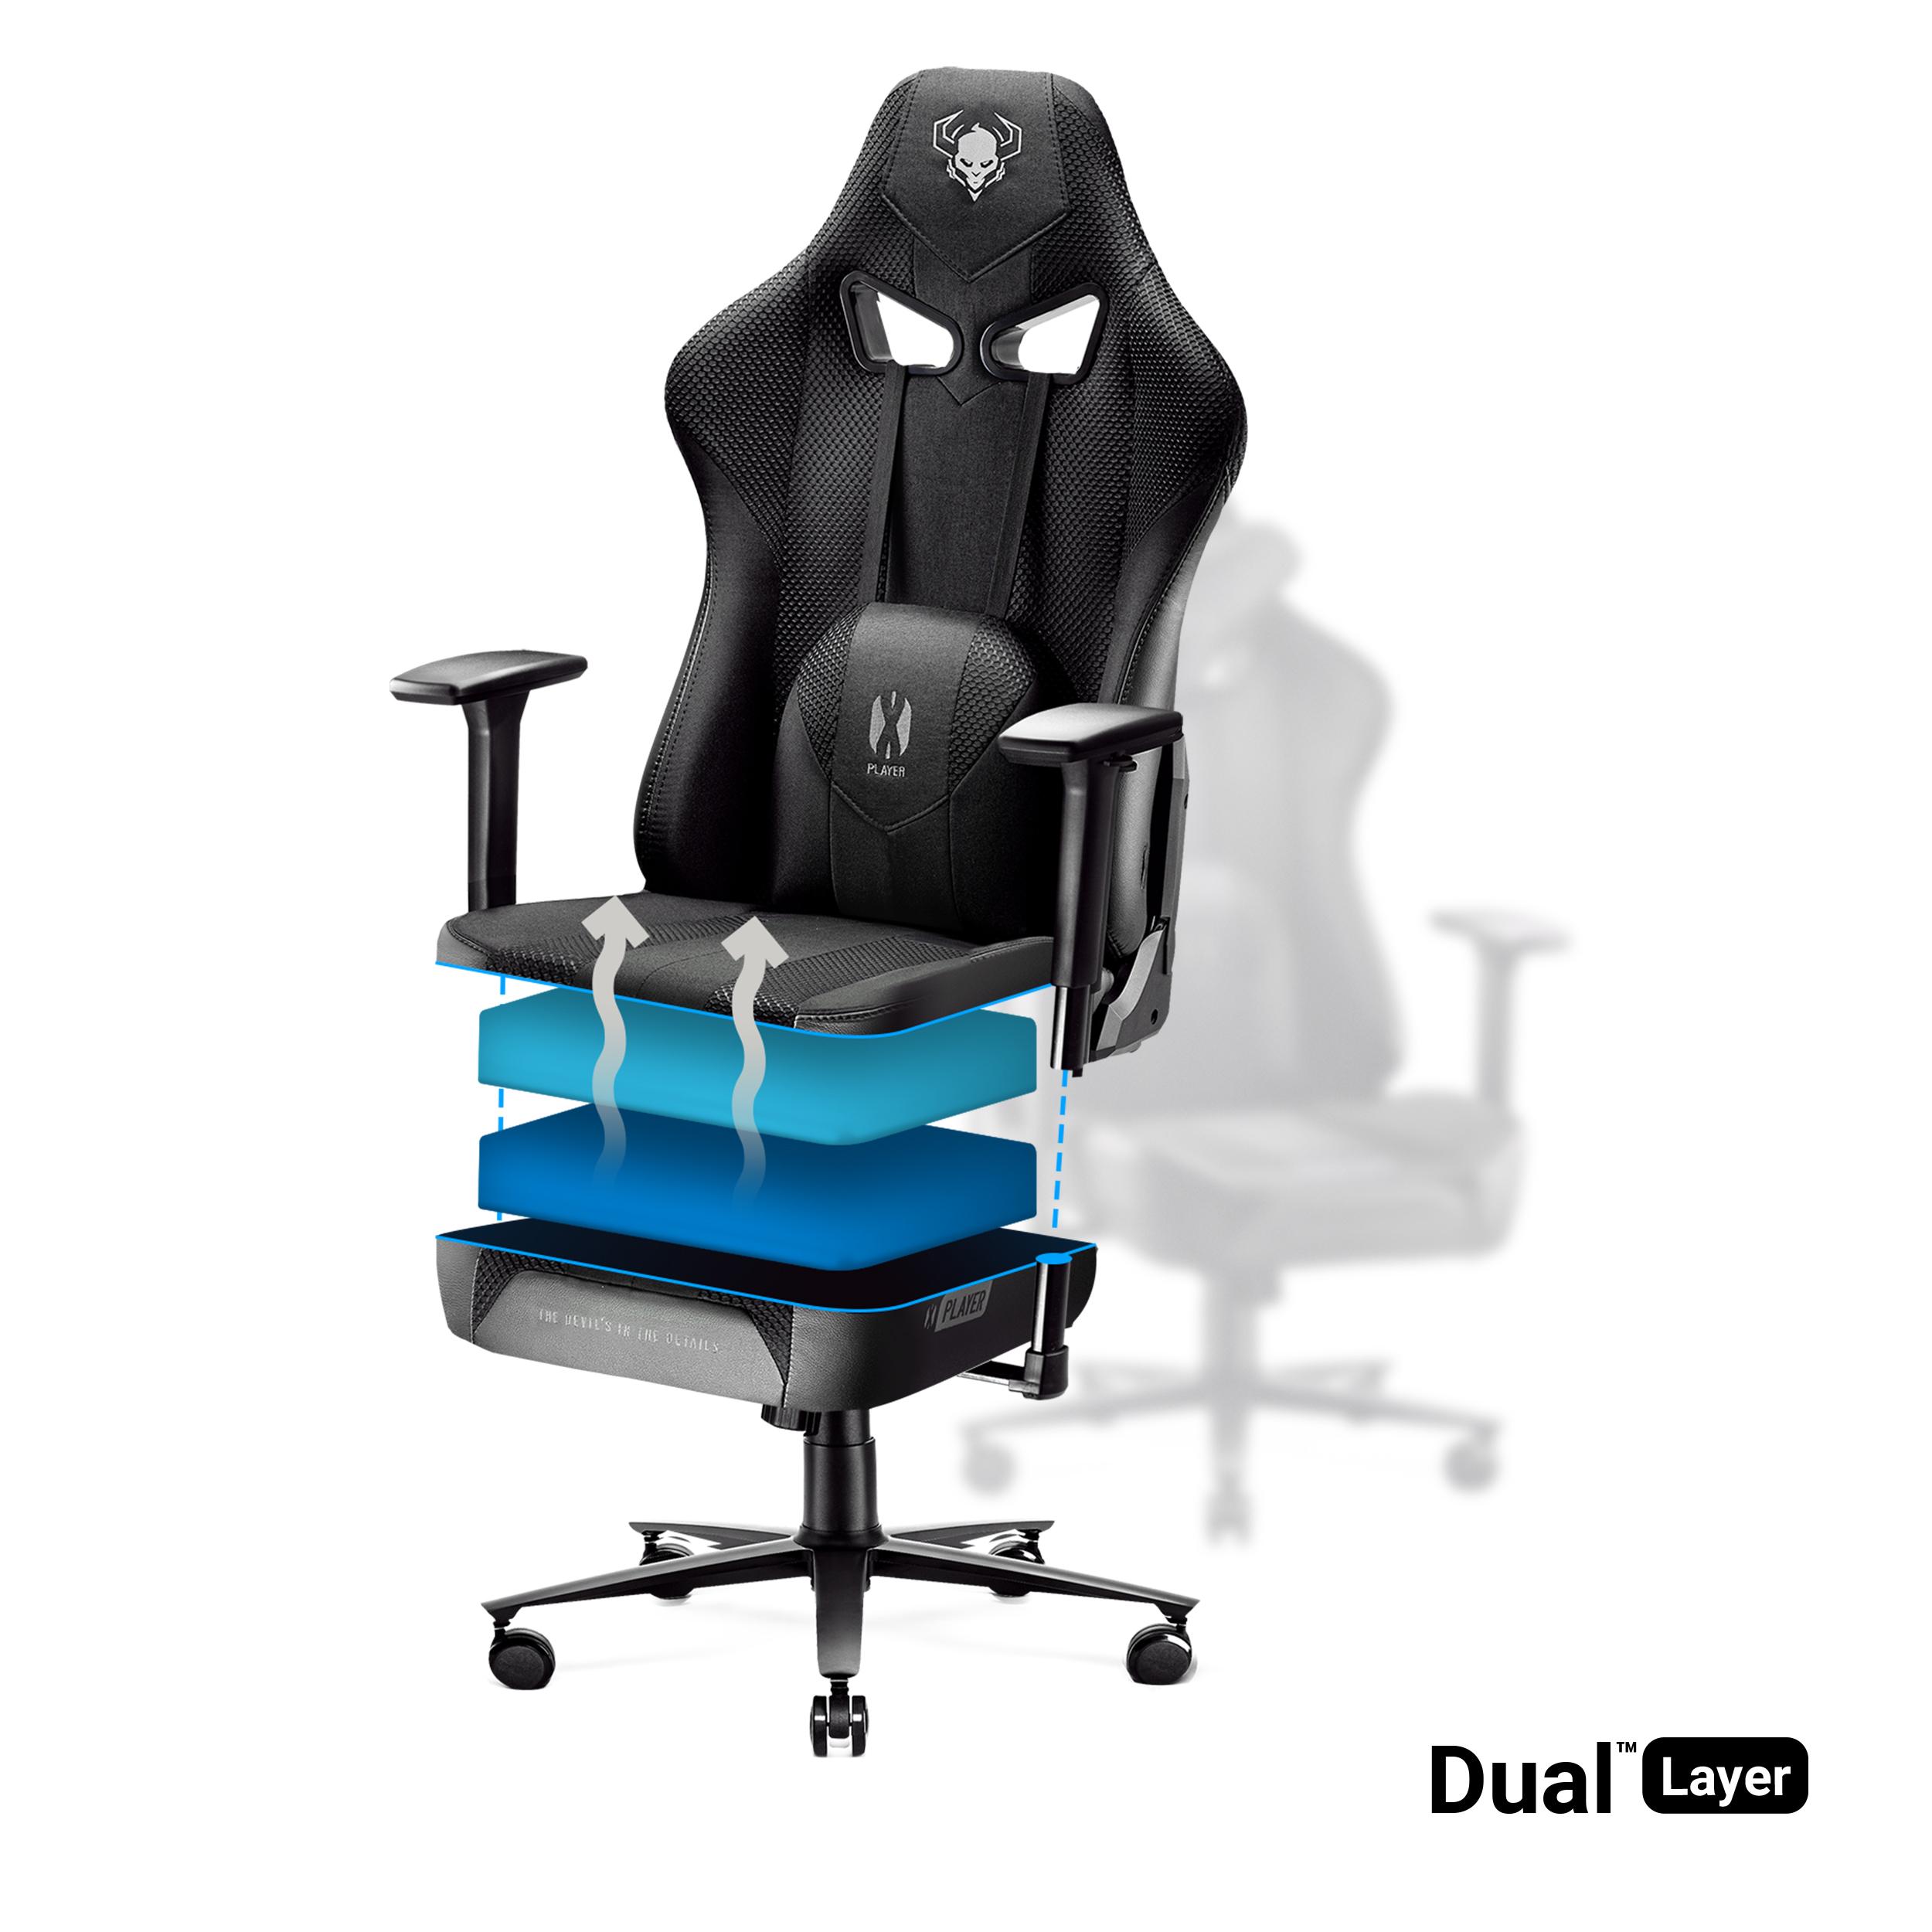 DIABLO CHAIRS GAMING STUHL black 2.0 X-PLAYER NORMAL Chair, Gaming